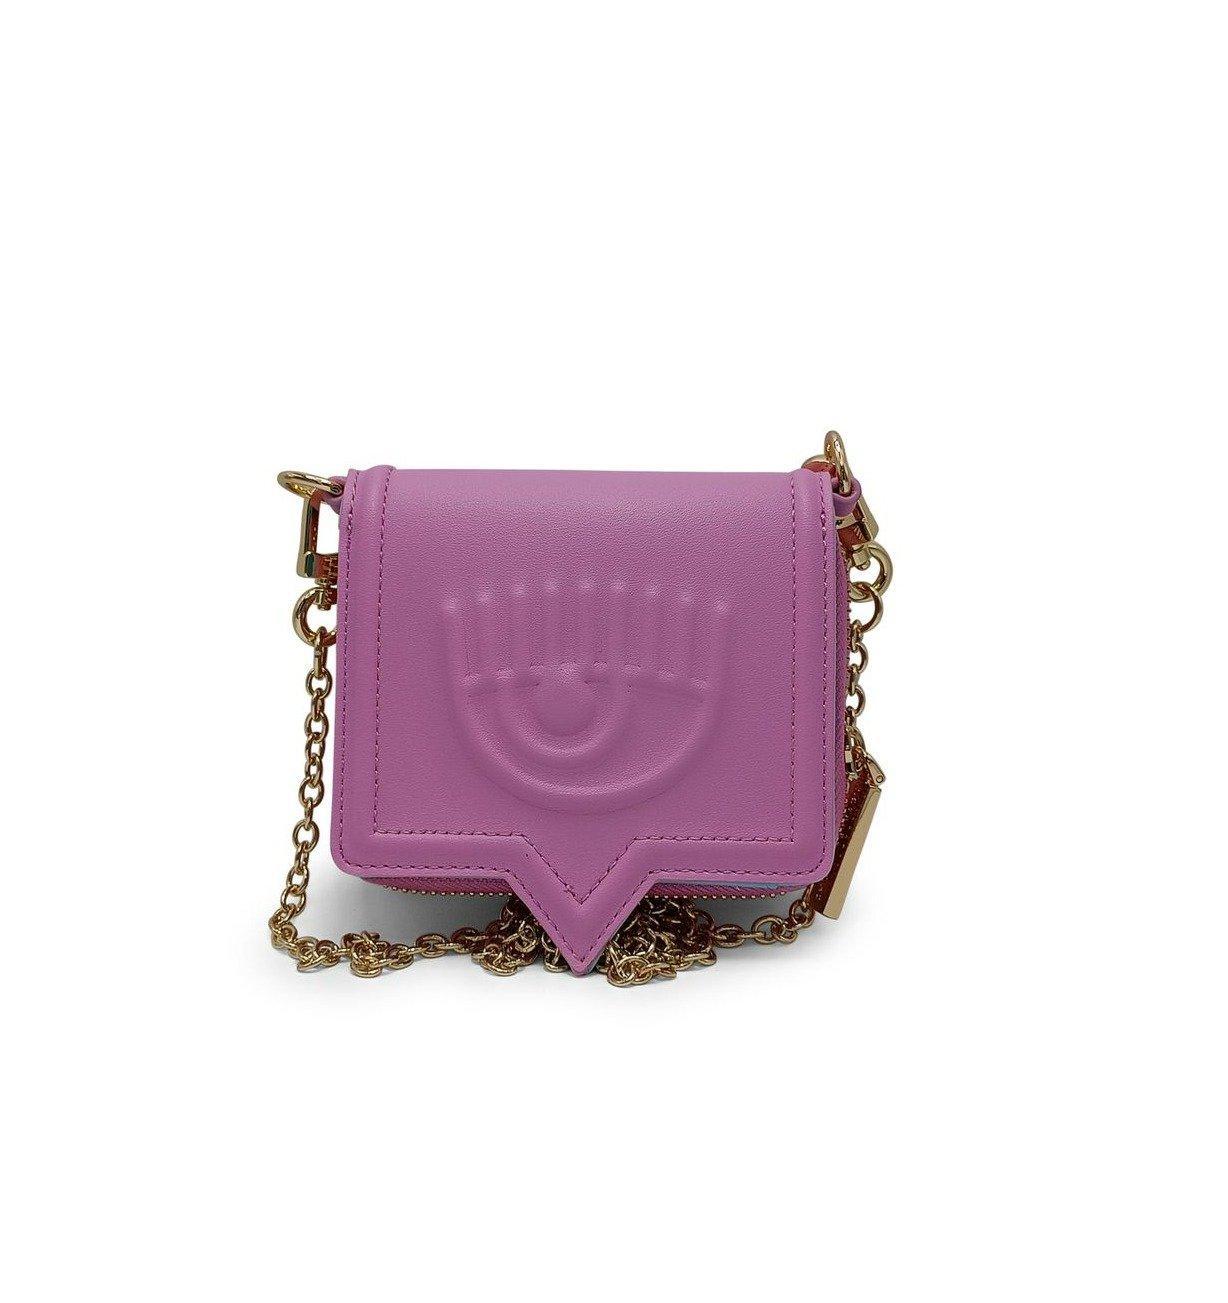 CHIARA FERRAGNI, Lilac Women's Wallet